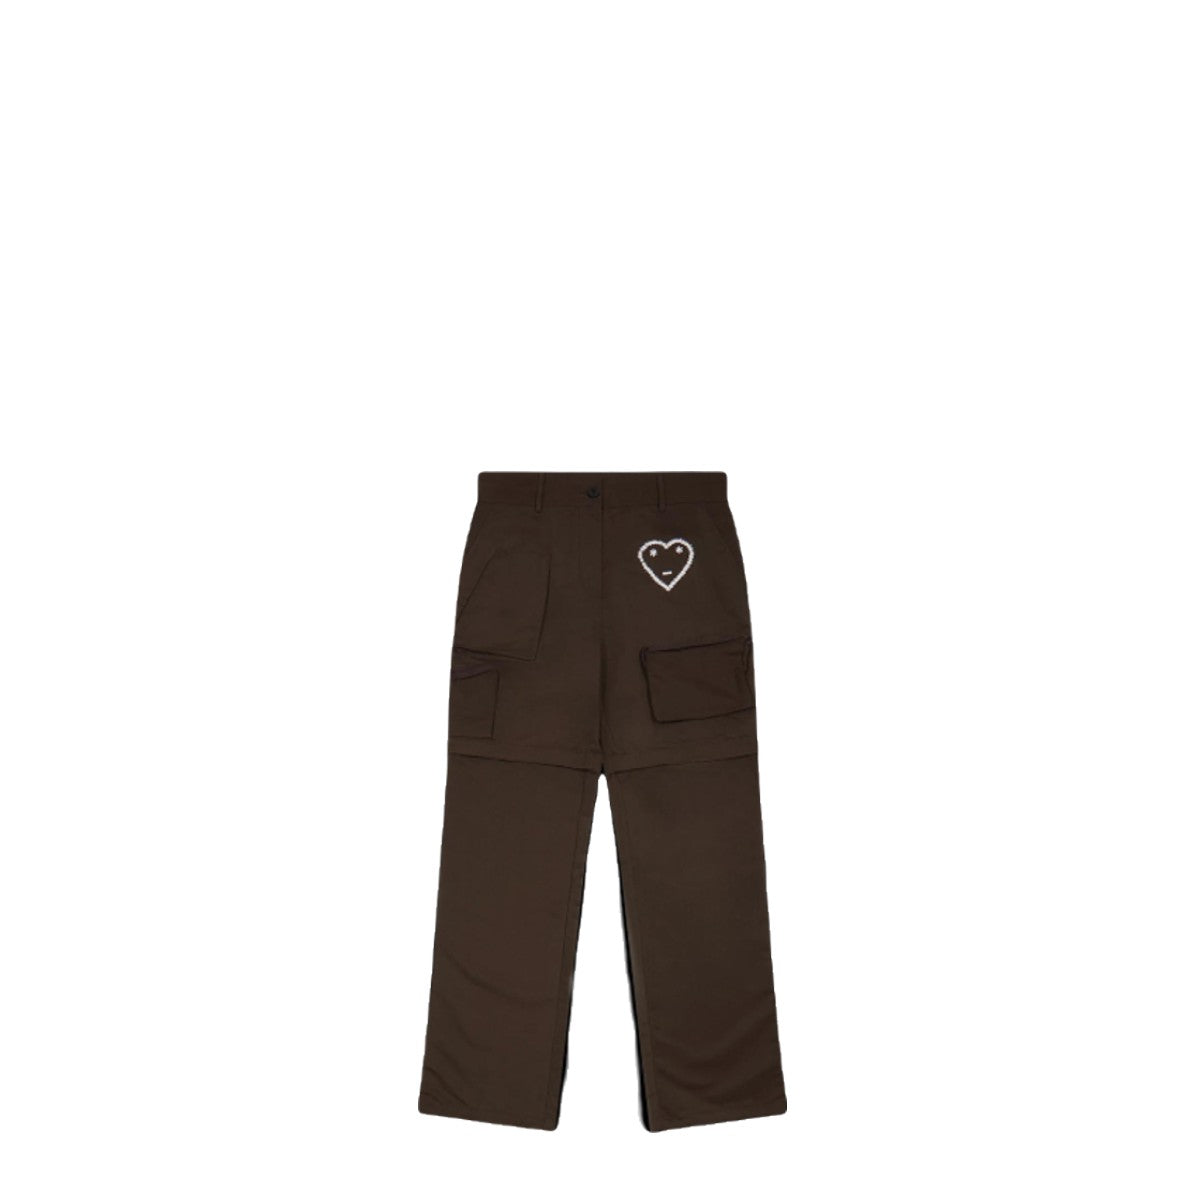 Carsicko Cargo Pants - Brown